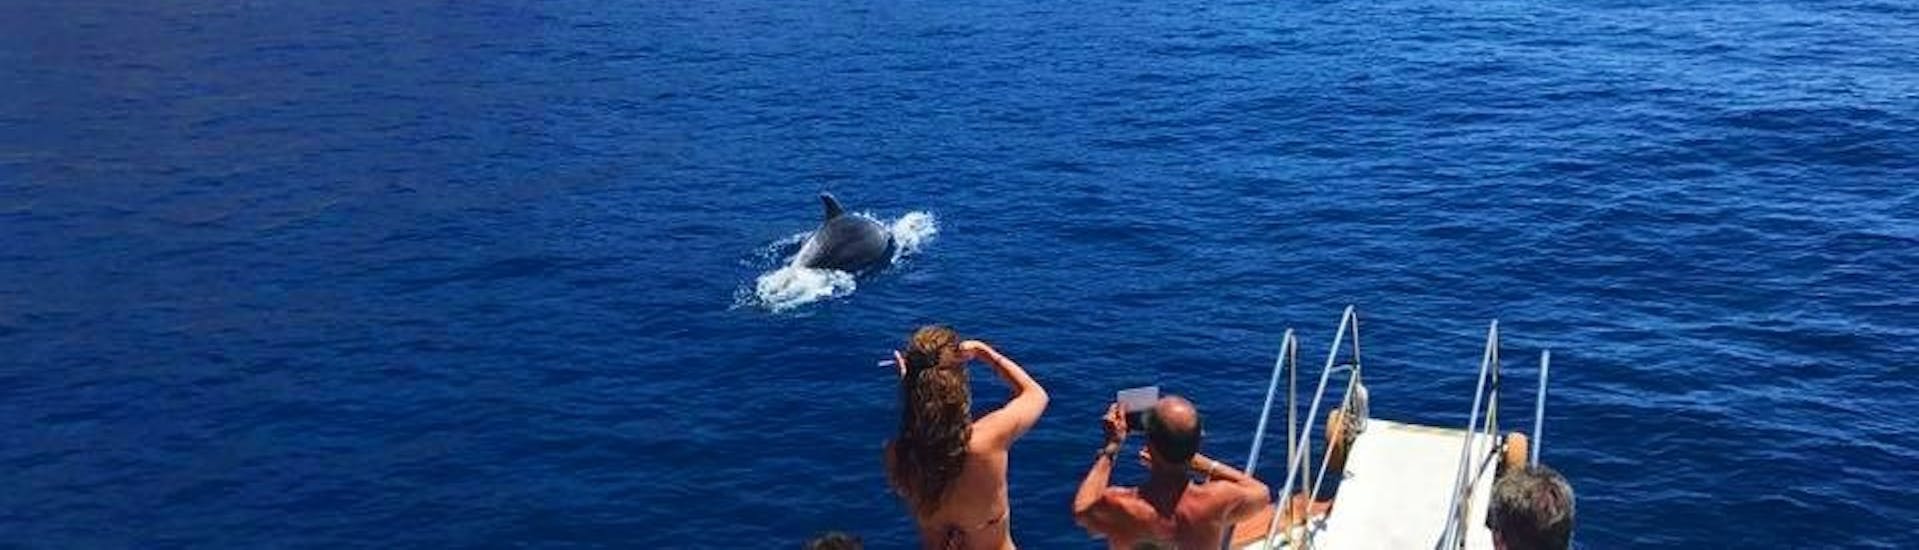 Observation des dauphins lors d'une balade en bateau de Marina di Campo à Sant'Andrea avec observation des dauphins avec Baby Princess Elba.